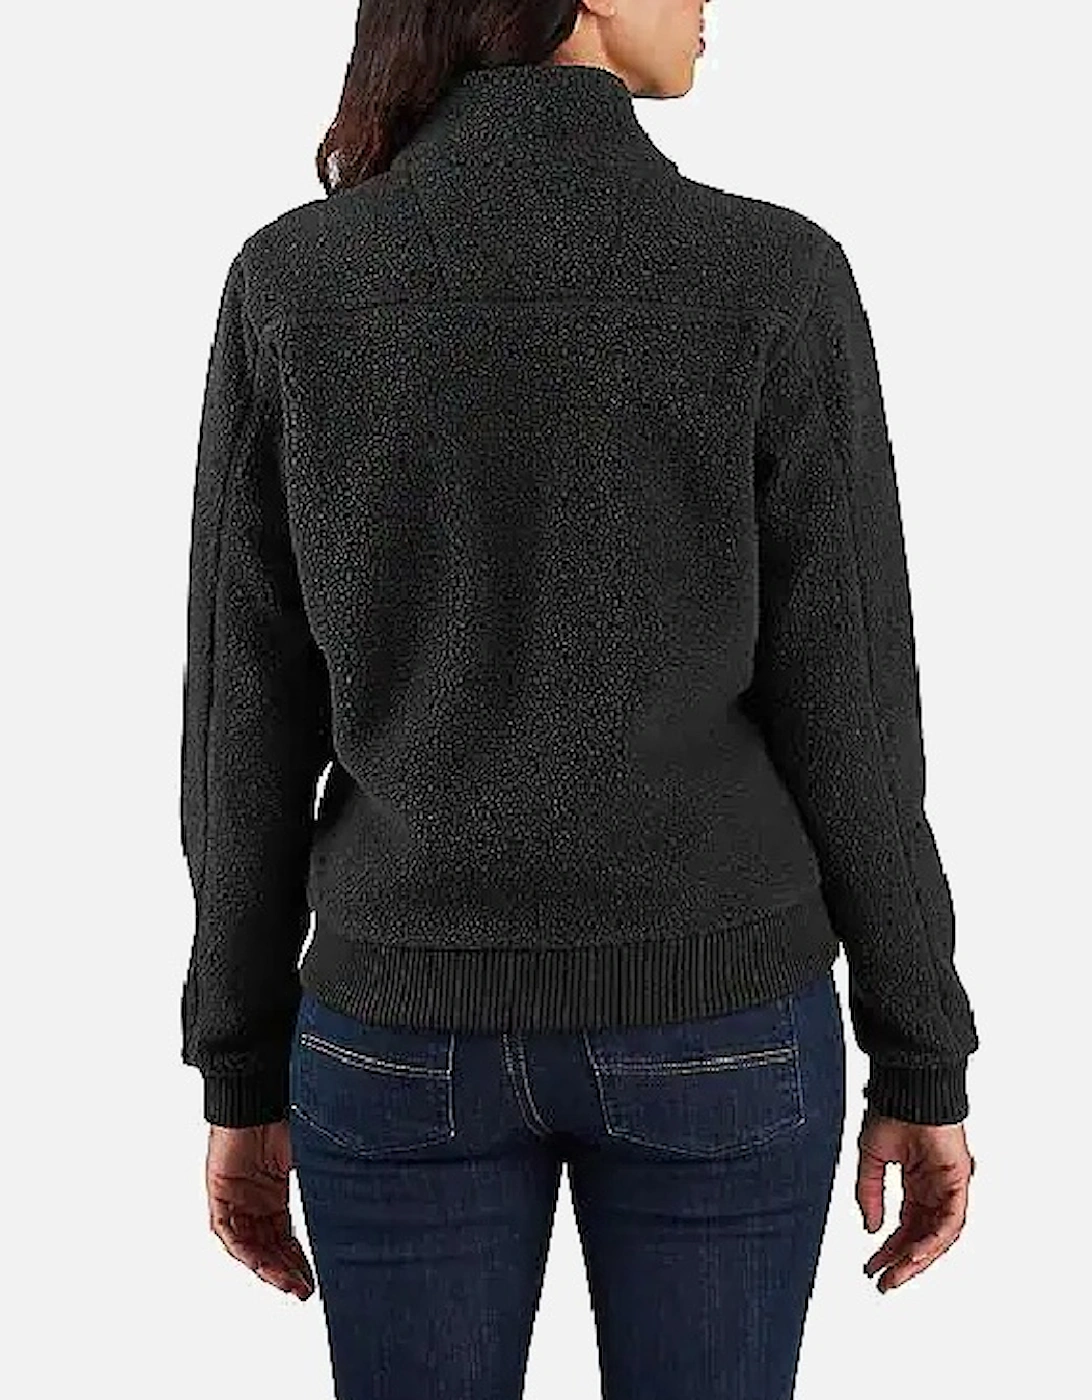 Carhartt Women's Fleece Jacket Black